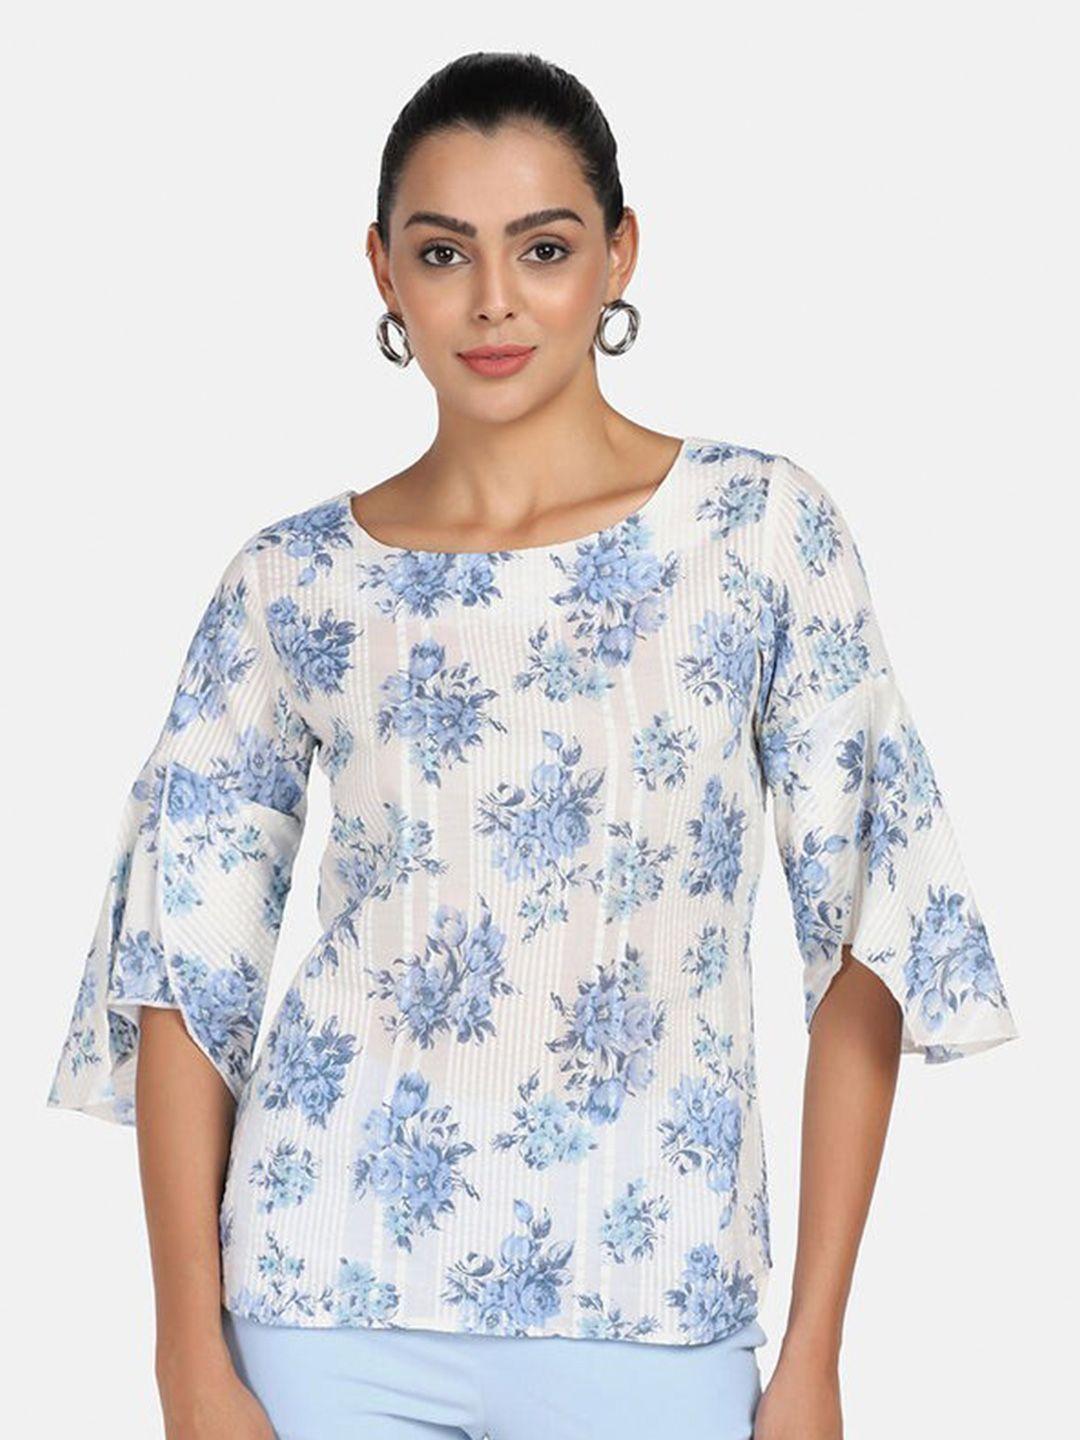 powersutra blue & white floral cotton print top